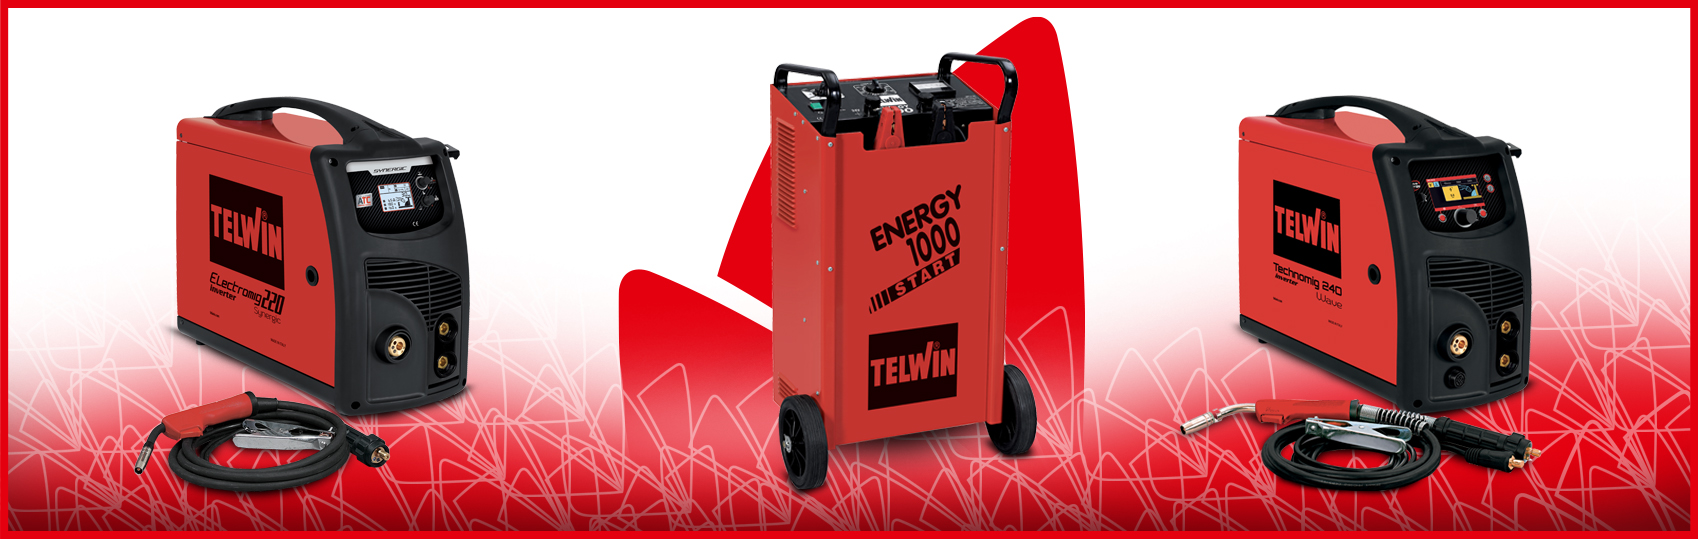 Telwin Maxima 160 230 V synergic inverter